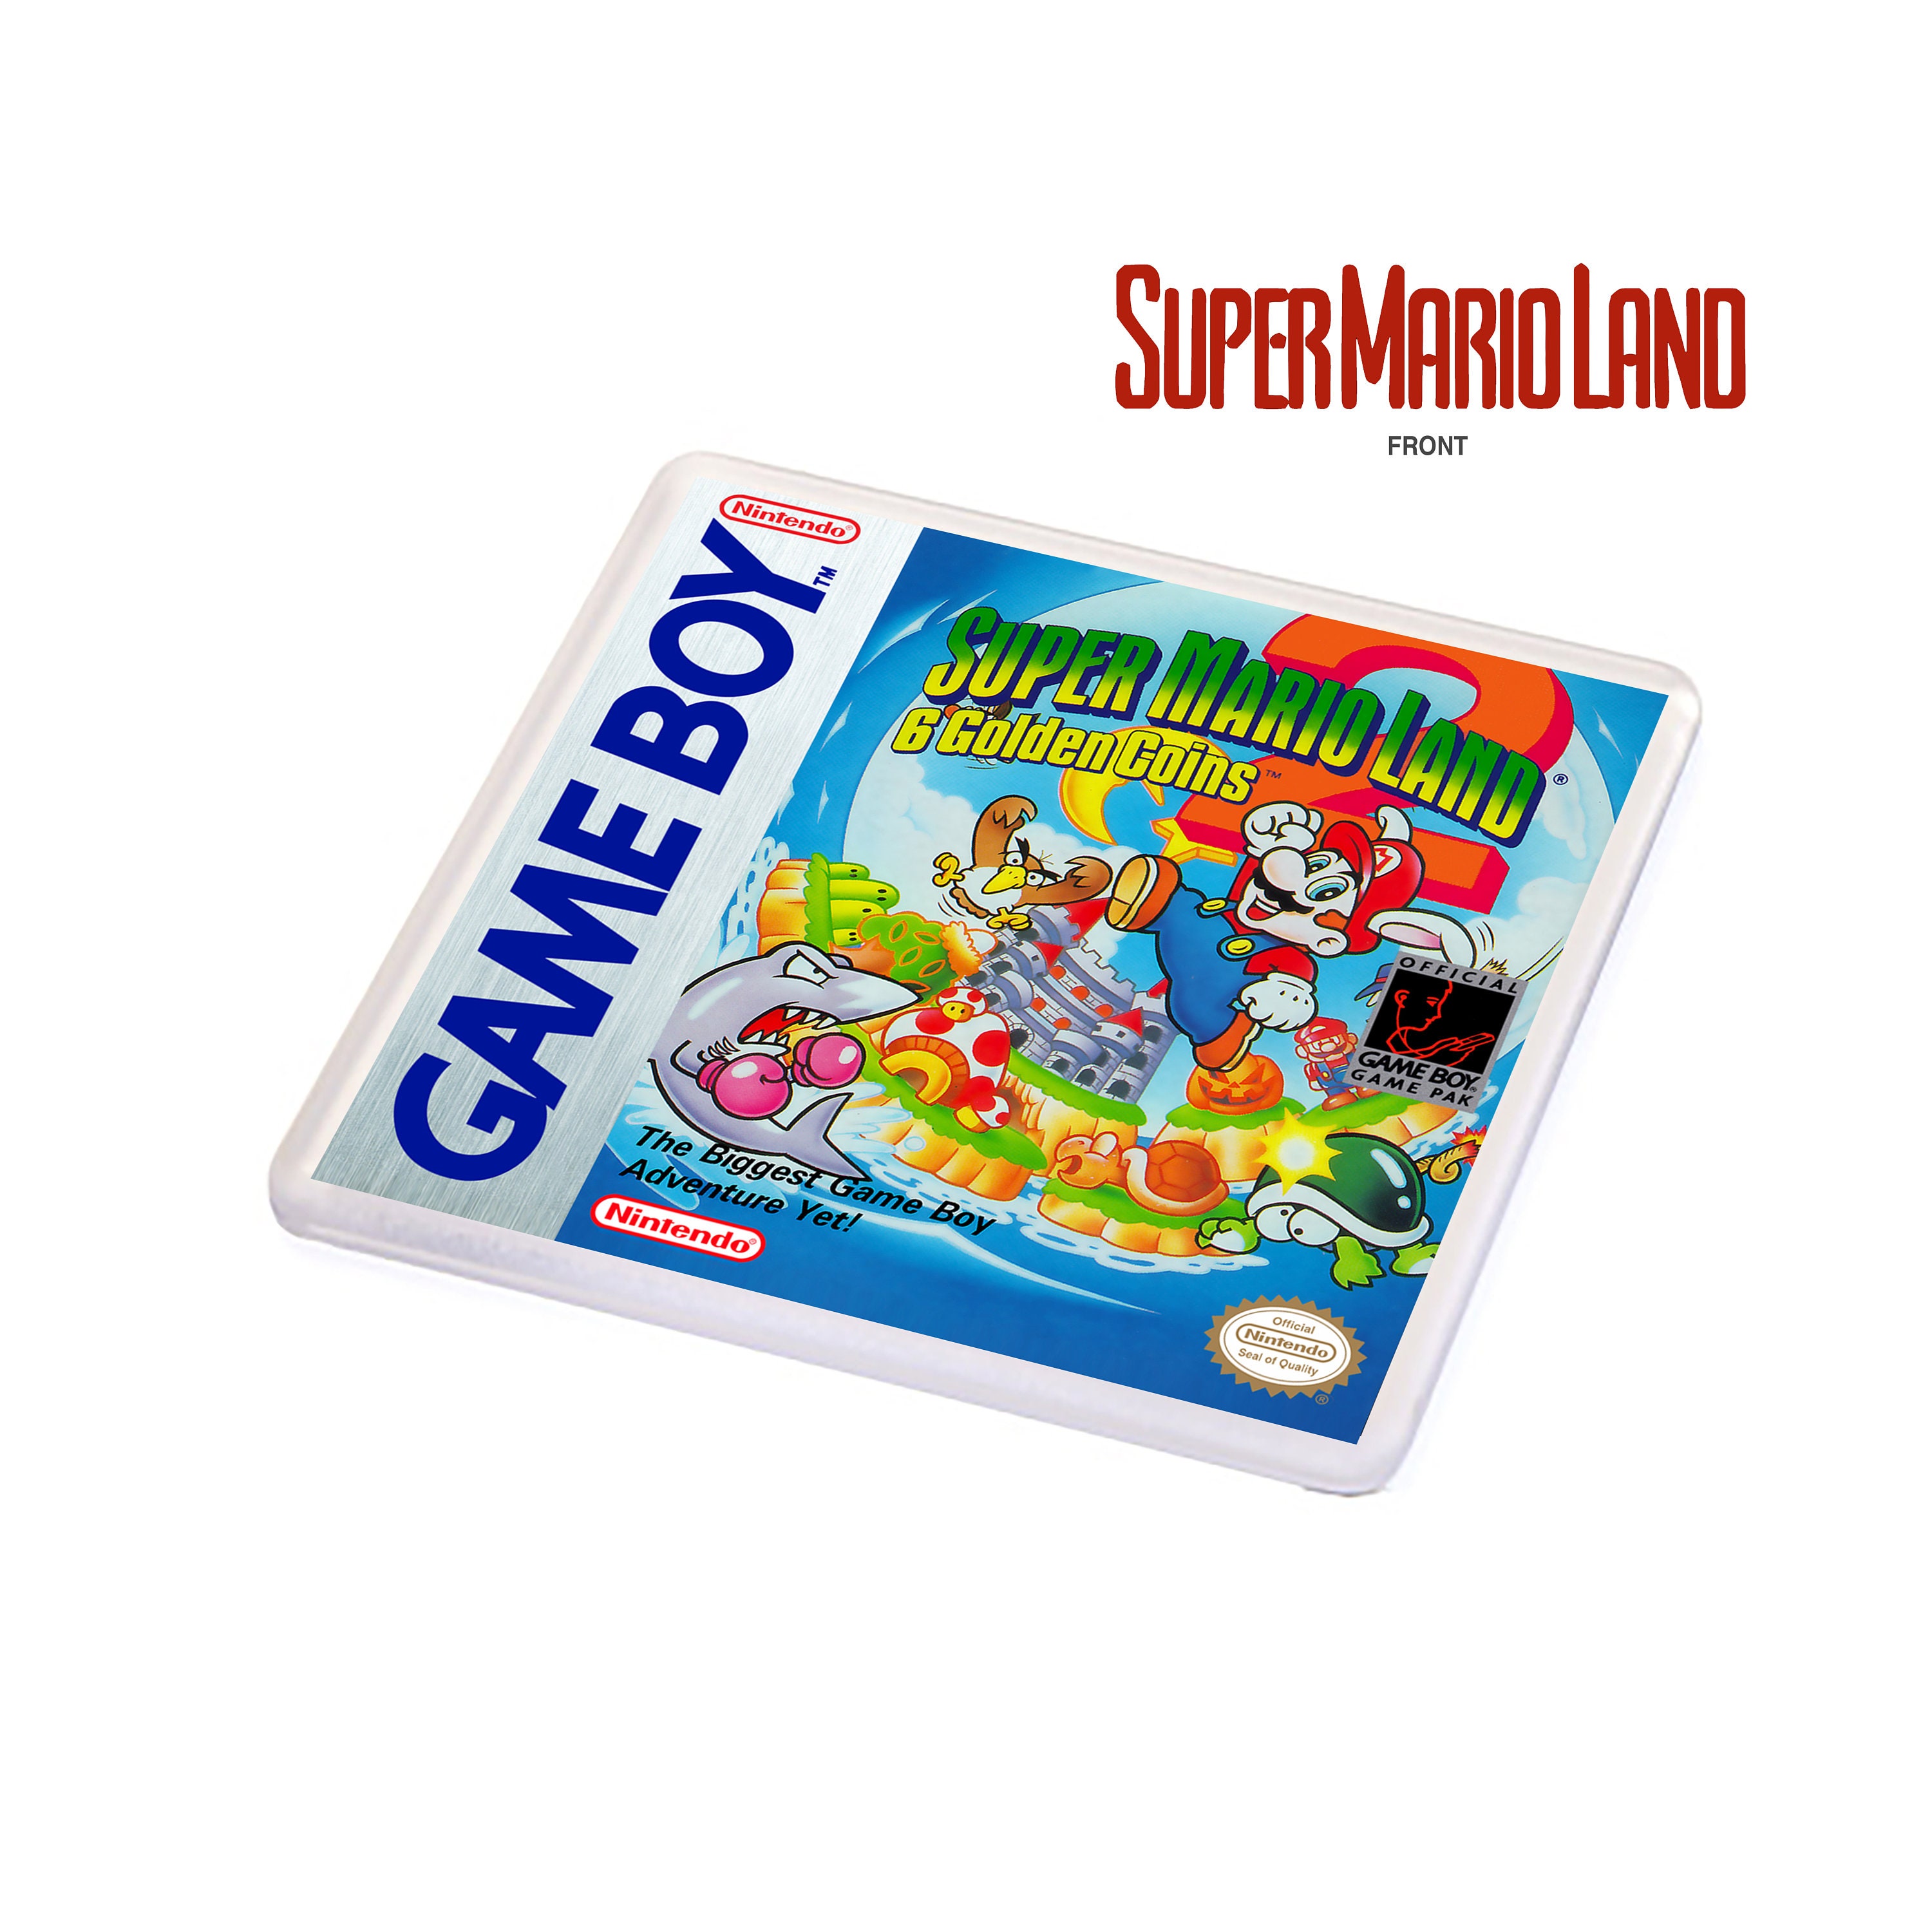 GAMEBOY Review – Super Mario Land 2 – RetroGame Man